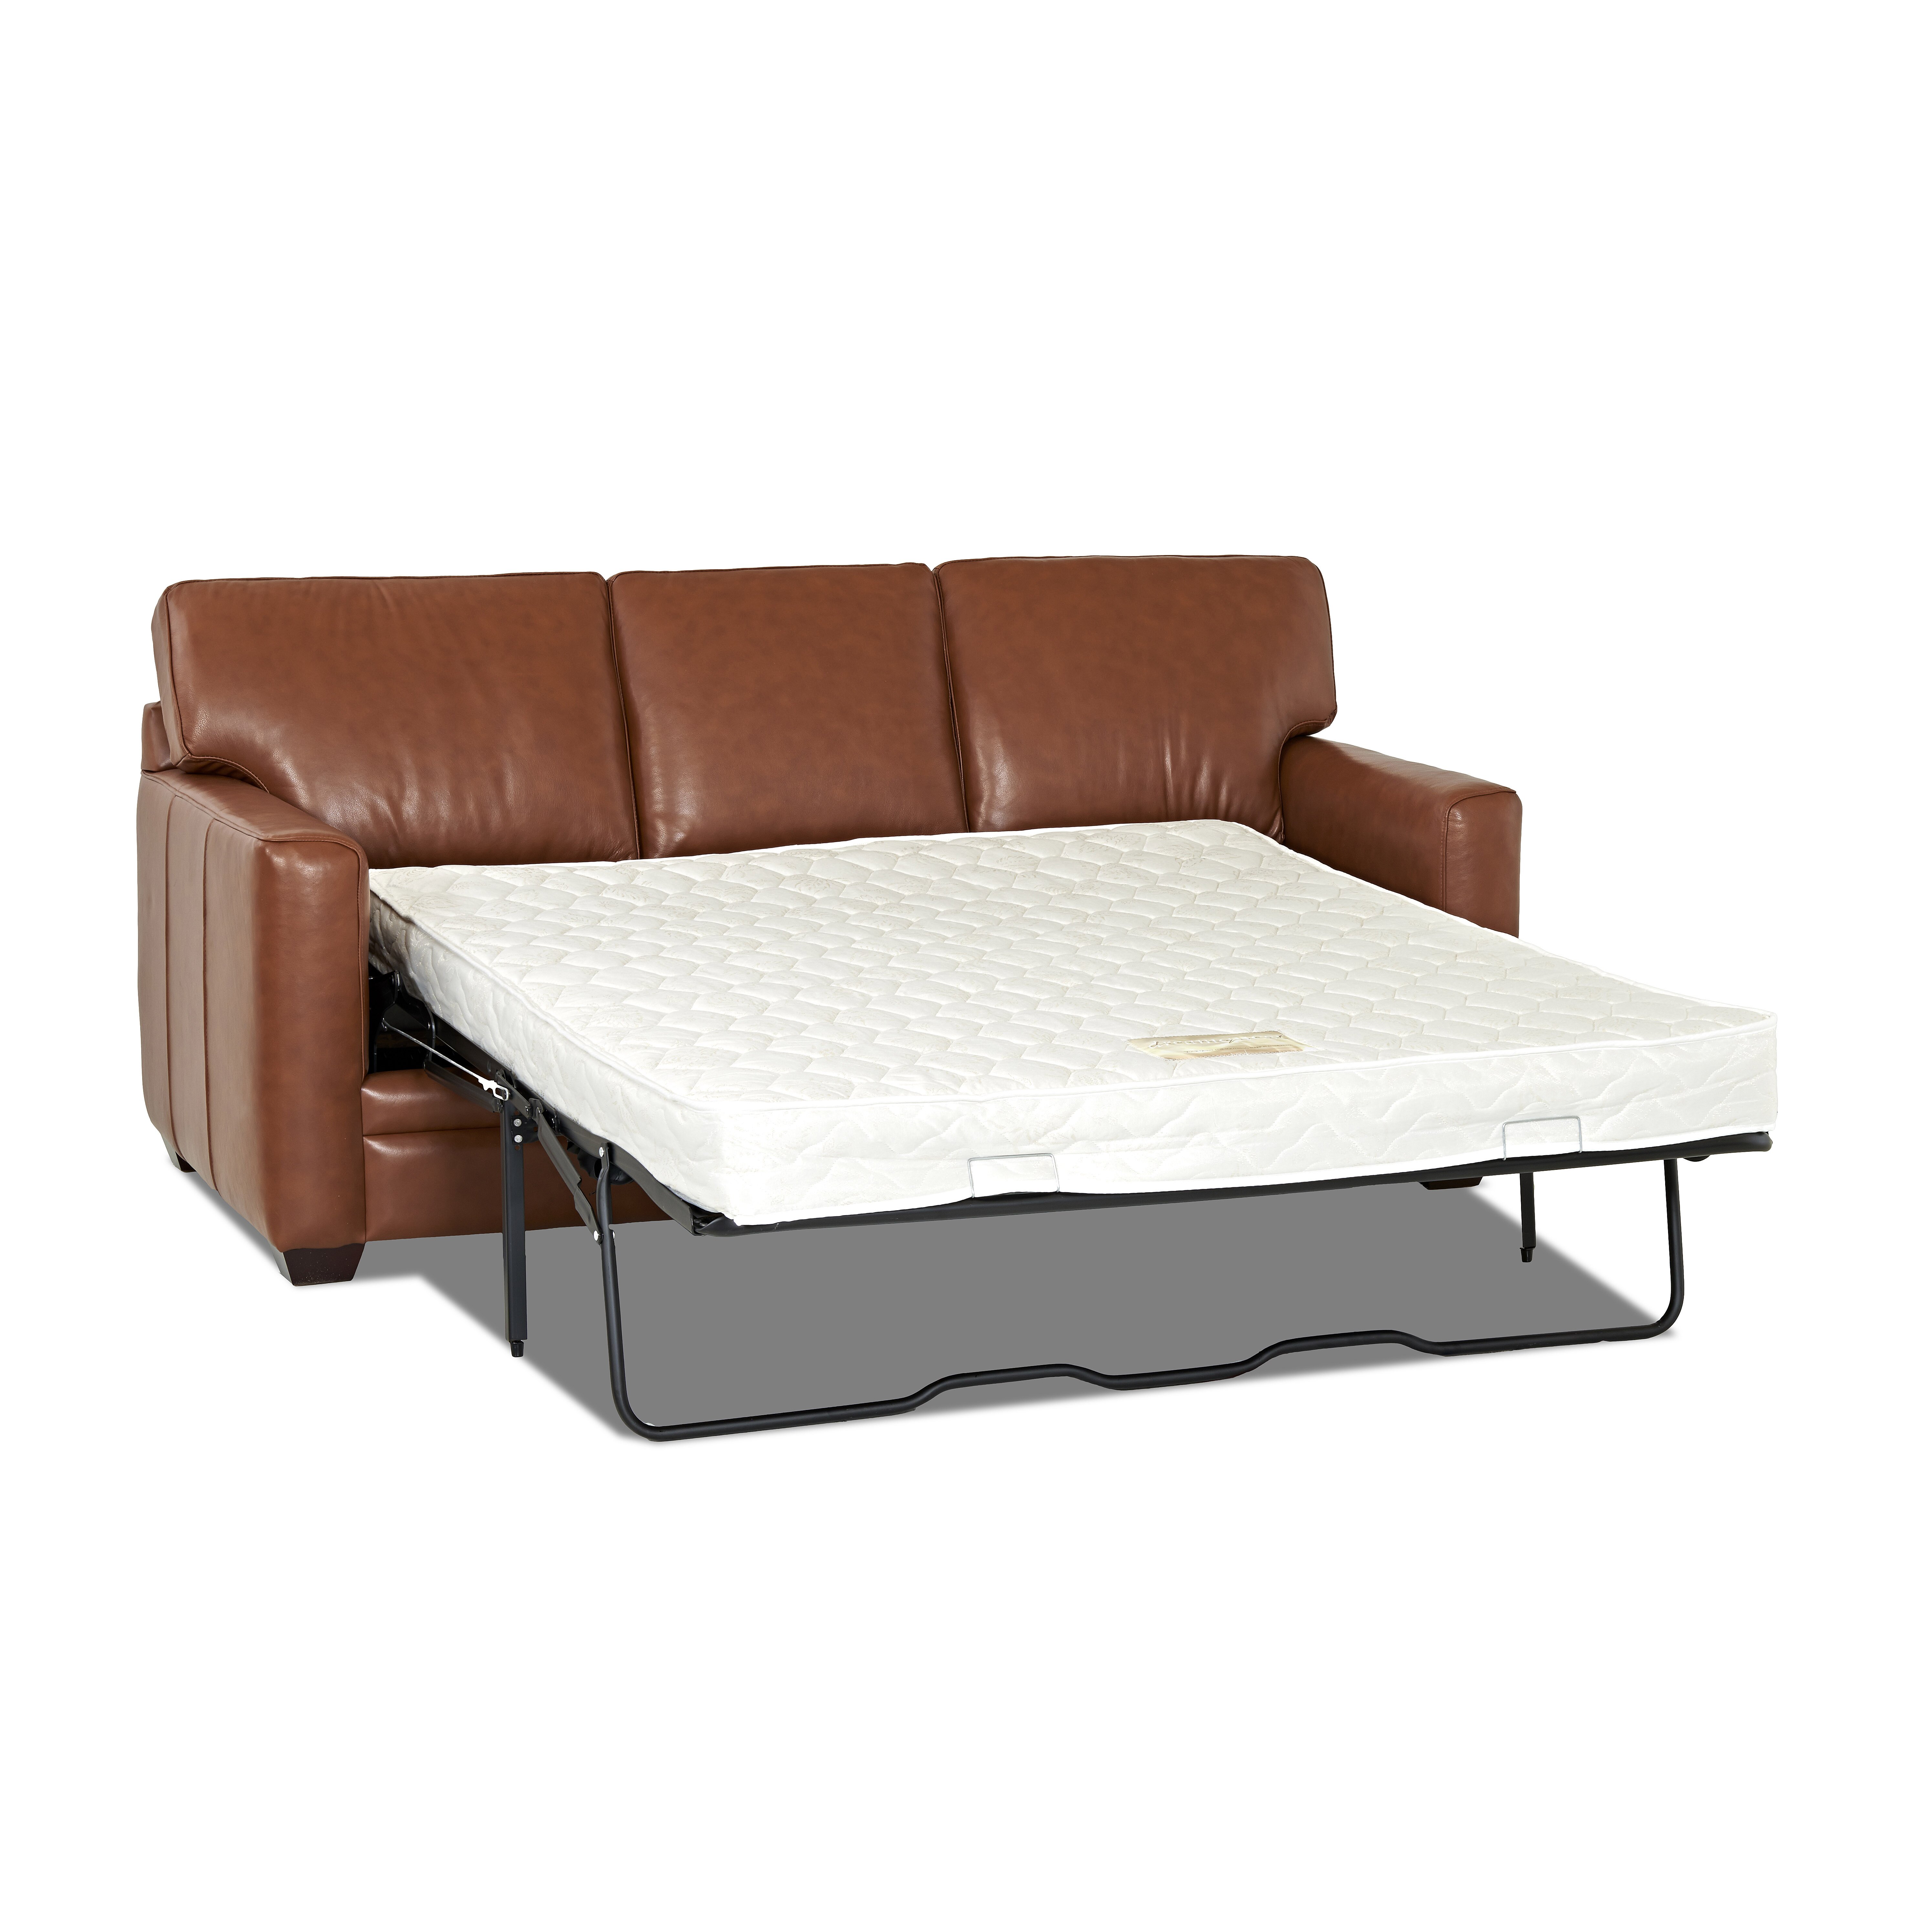 Wayfair Custom Upholstery Carleton Leather Sleeper Sofa & Reviews